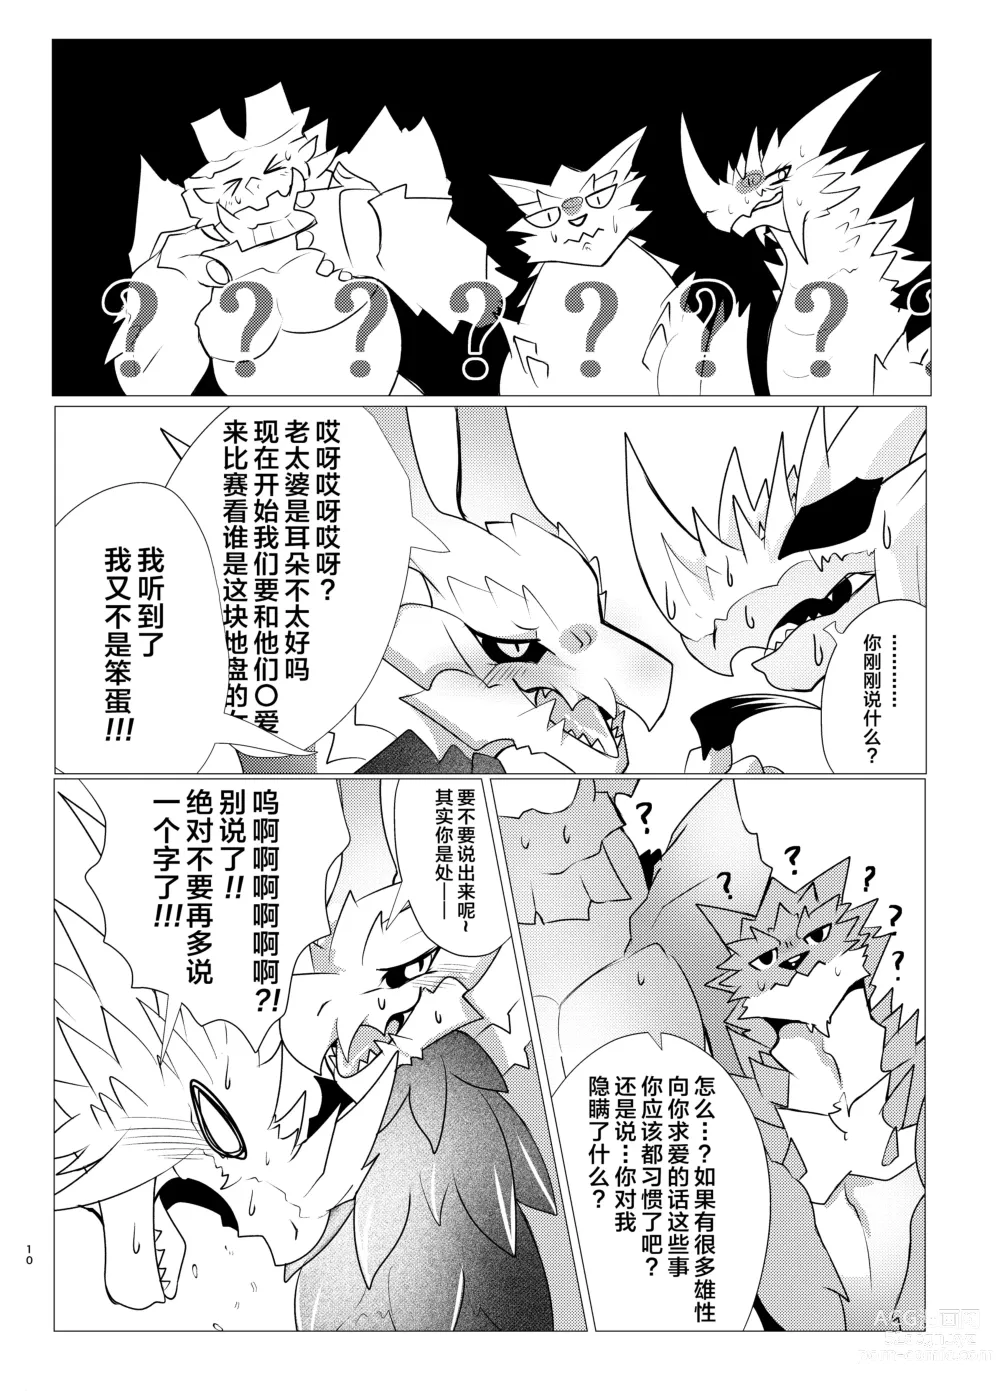 Page 9 of doujinshi 淫趴王之争?!